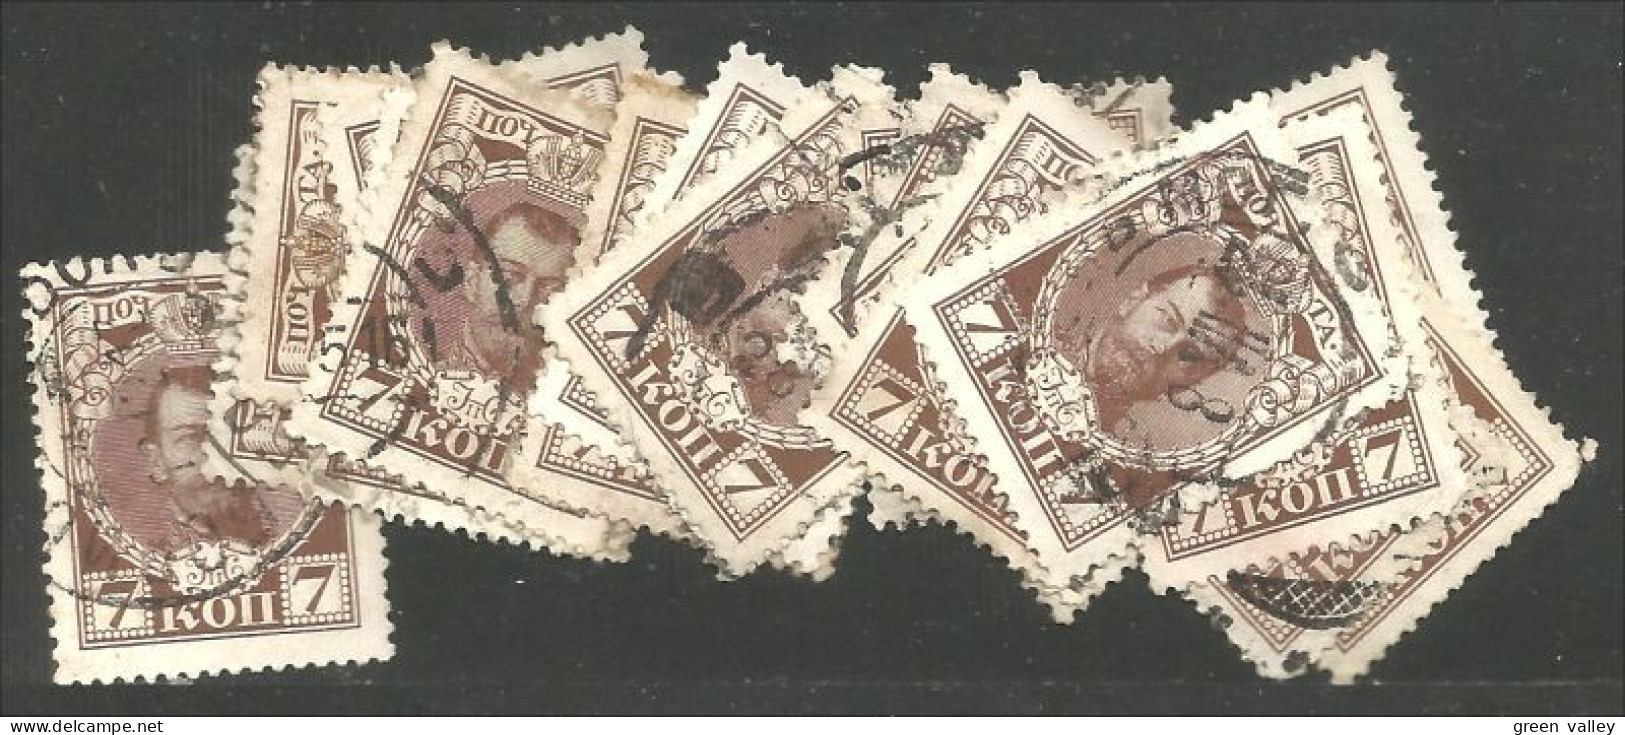 771 Russie 7k Brown 1913 18 Stamps For Study Tsar Tzar Nicholas II (RUZ-367) - Gebruikt